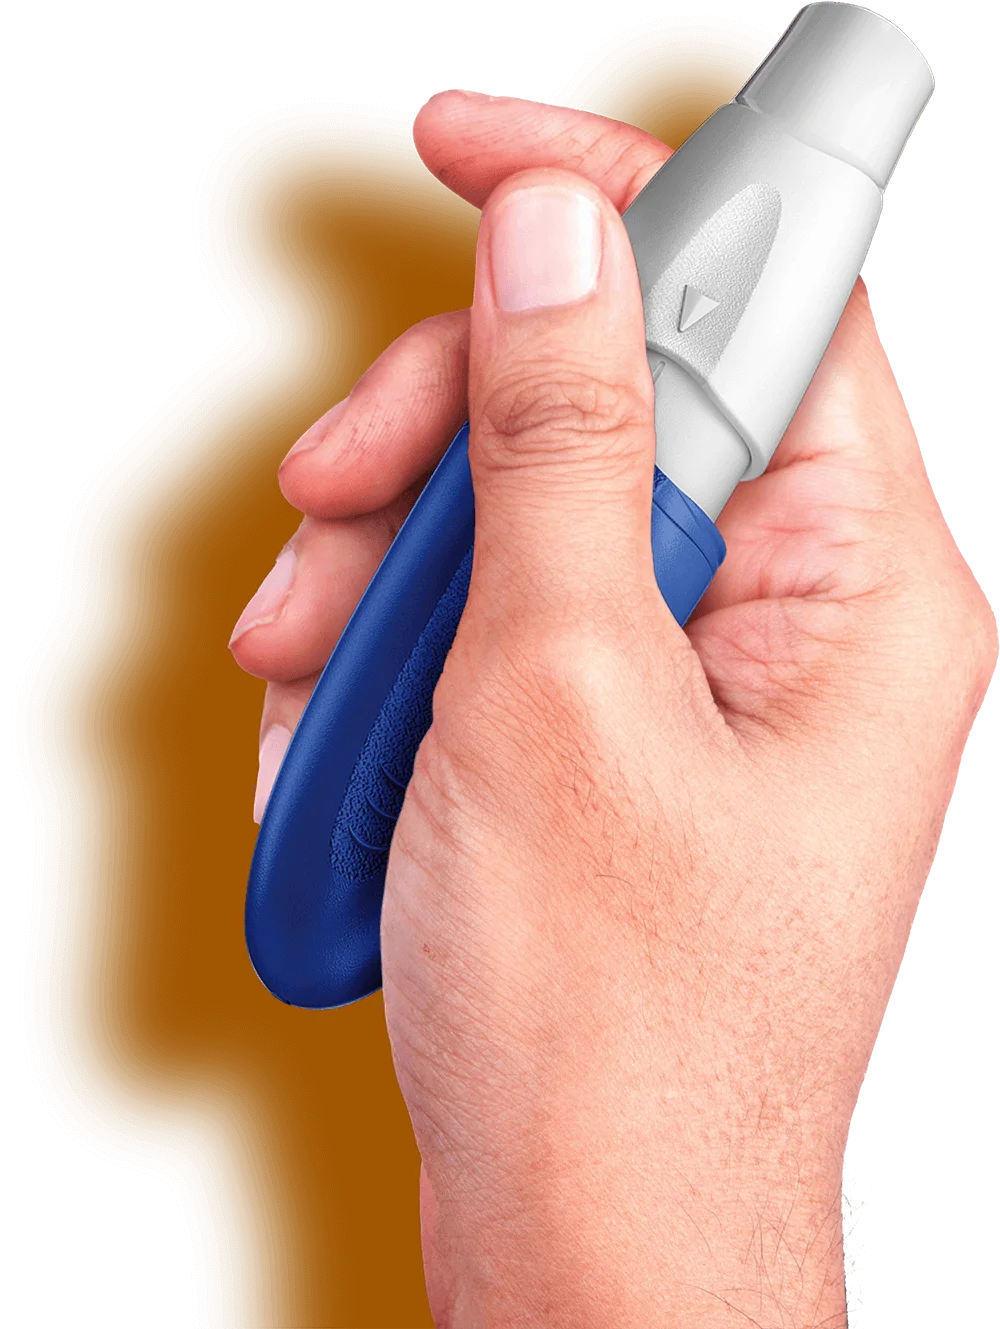 Close crop of a hand holding the INBRIJA inhaler.